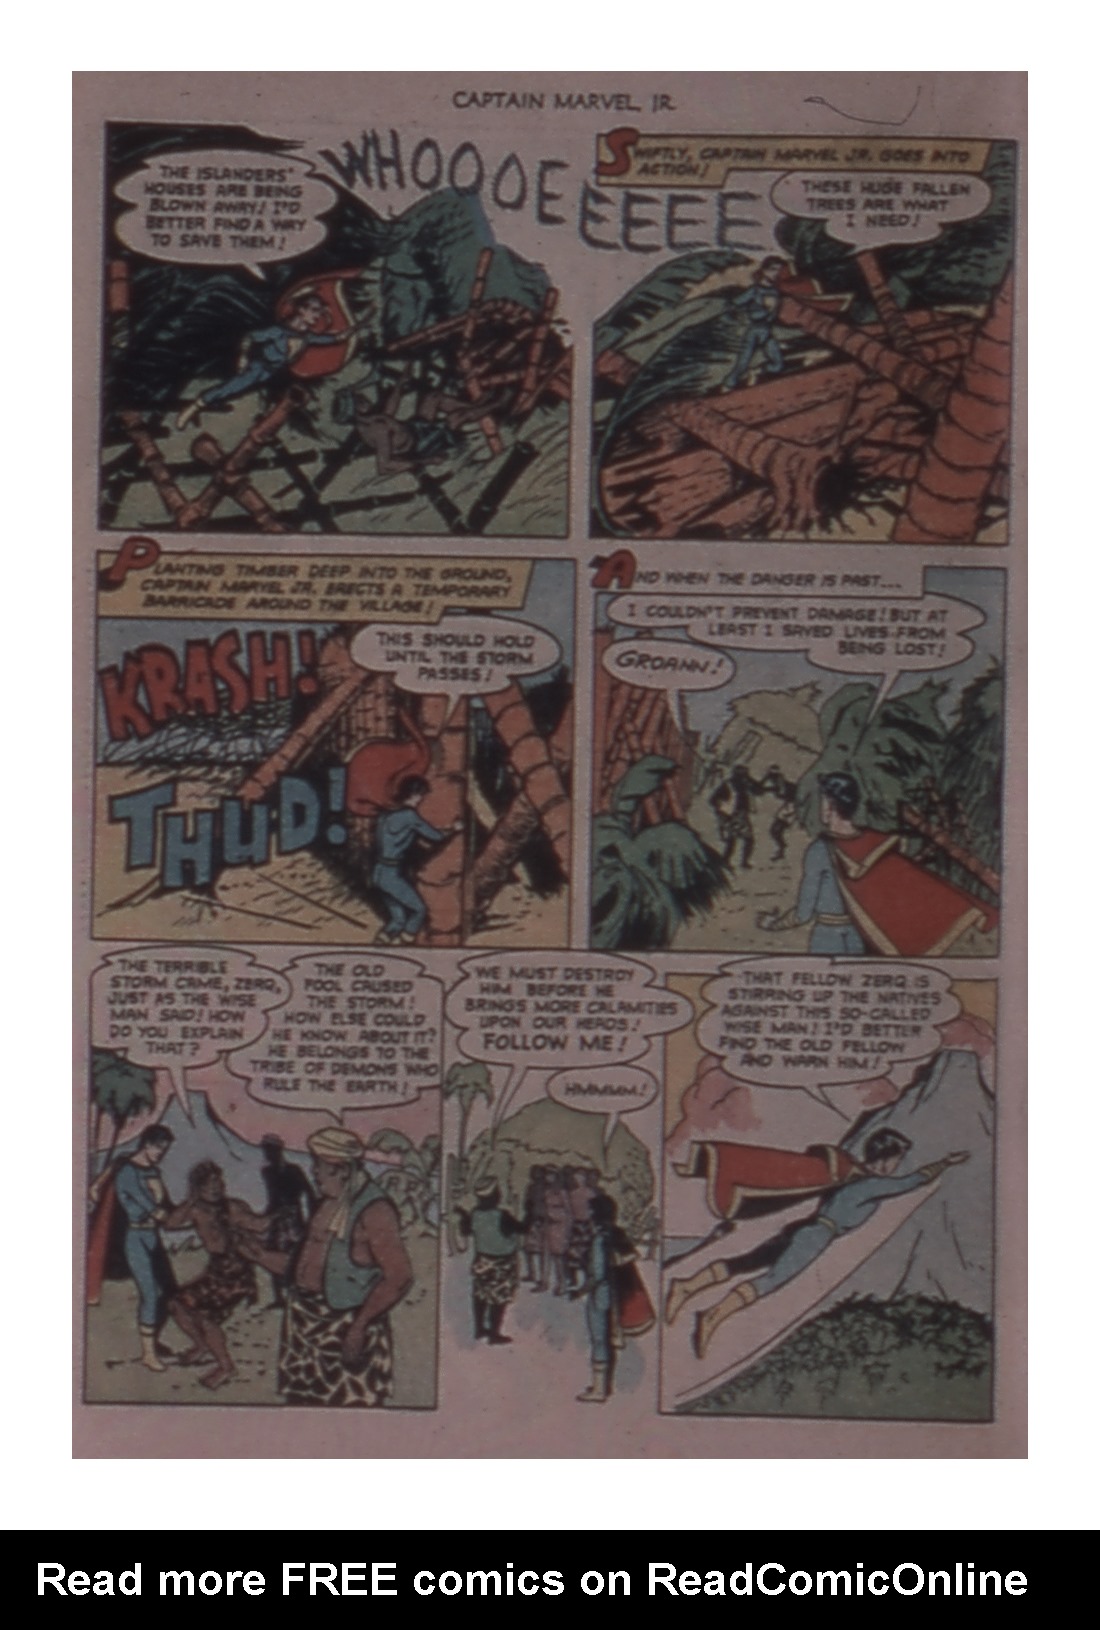 Read online Captain Marvel, Jr. comic -  Issue #114 - 20